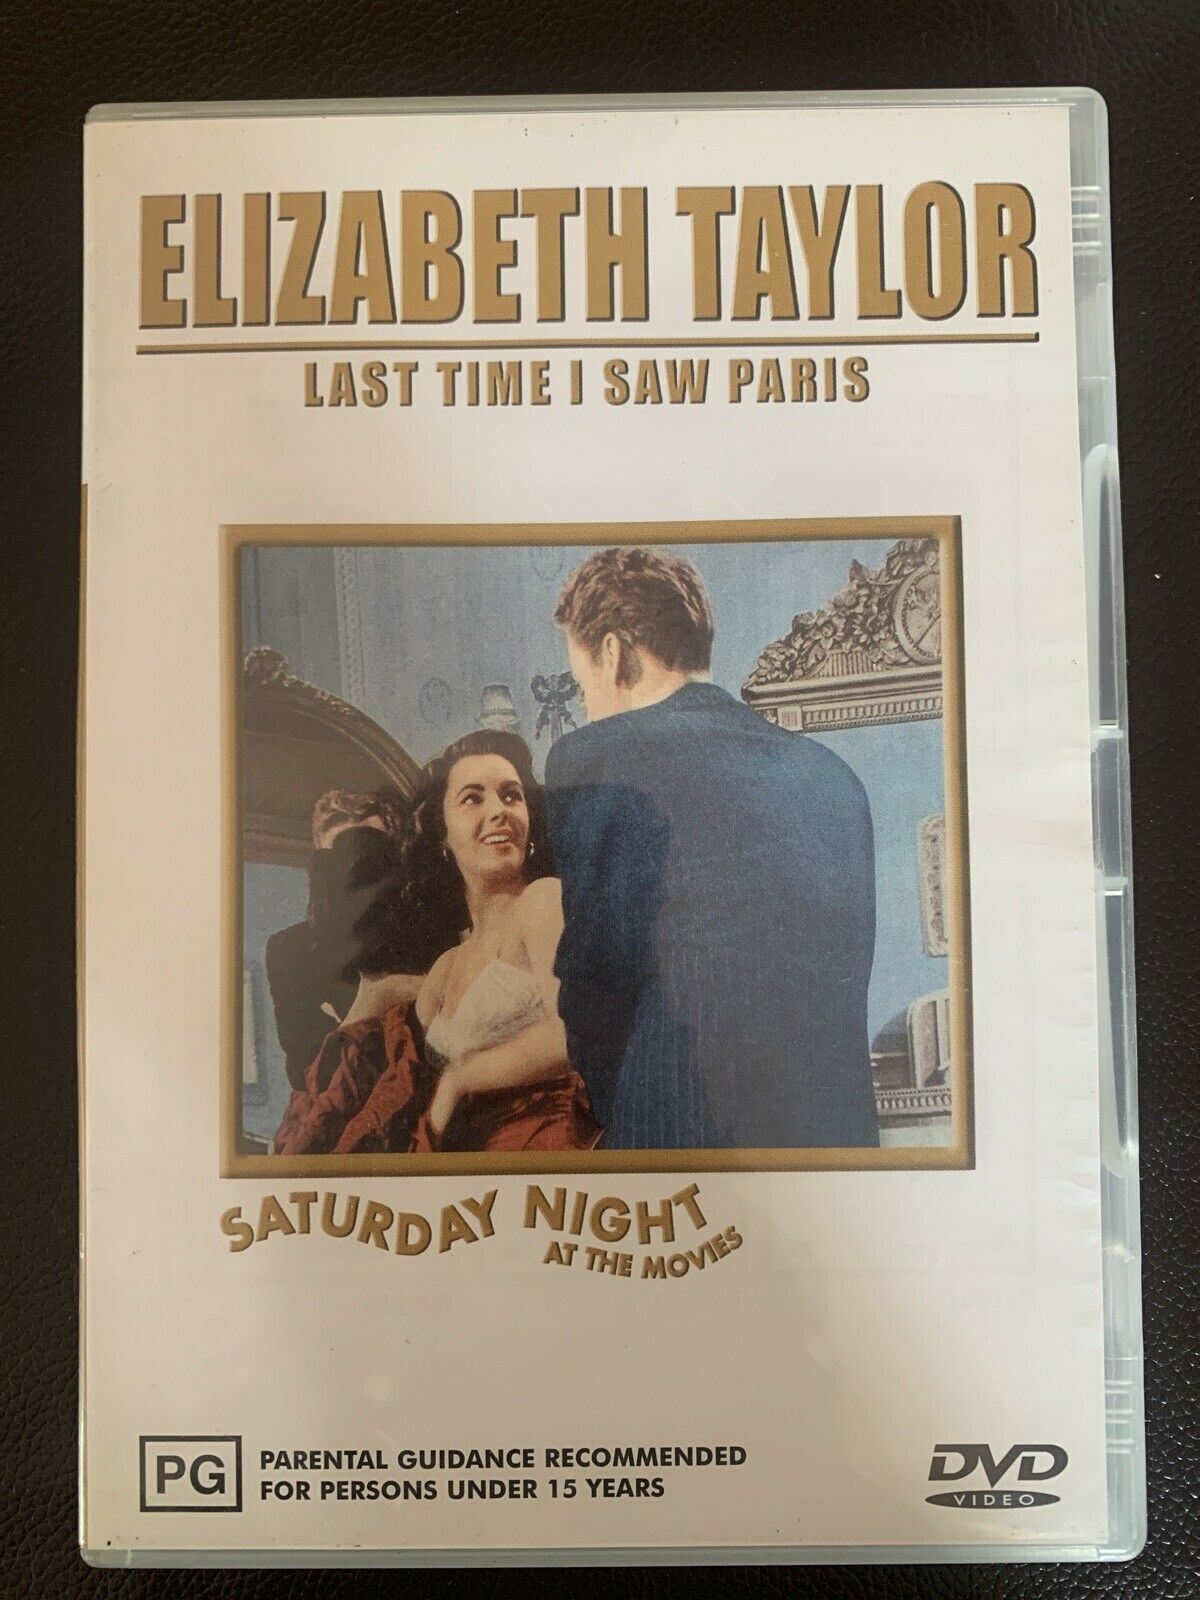 Last Time I Saw Paris (DVD, 1954) Elizabeth Taylor, Van Johnson - All Regions